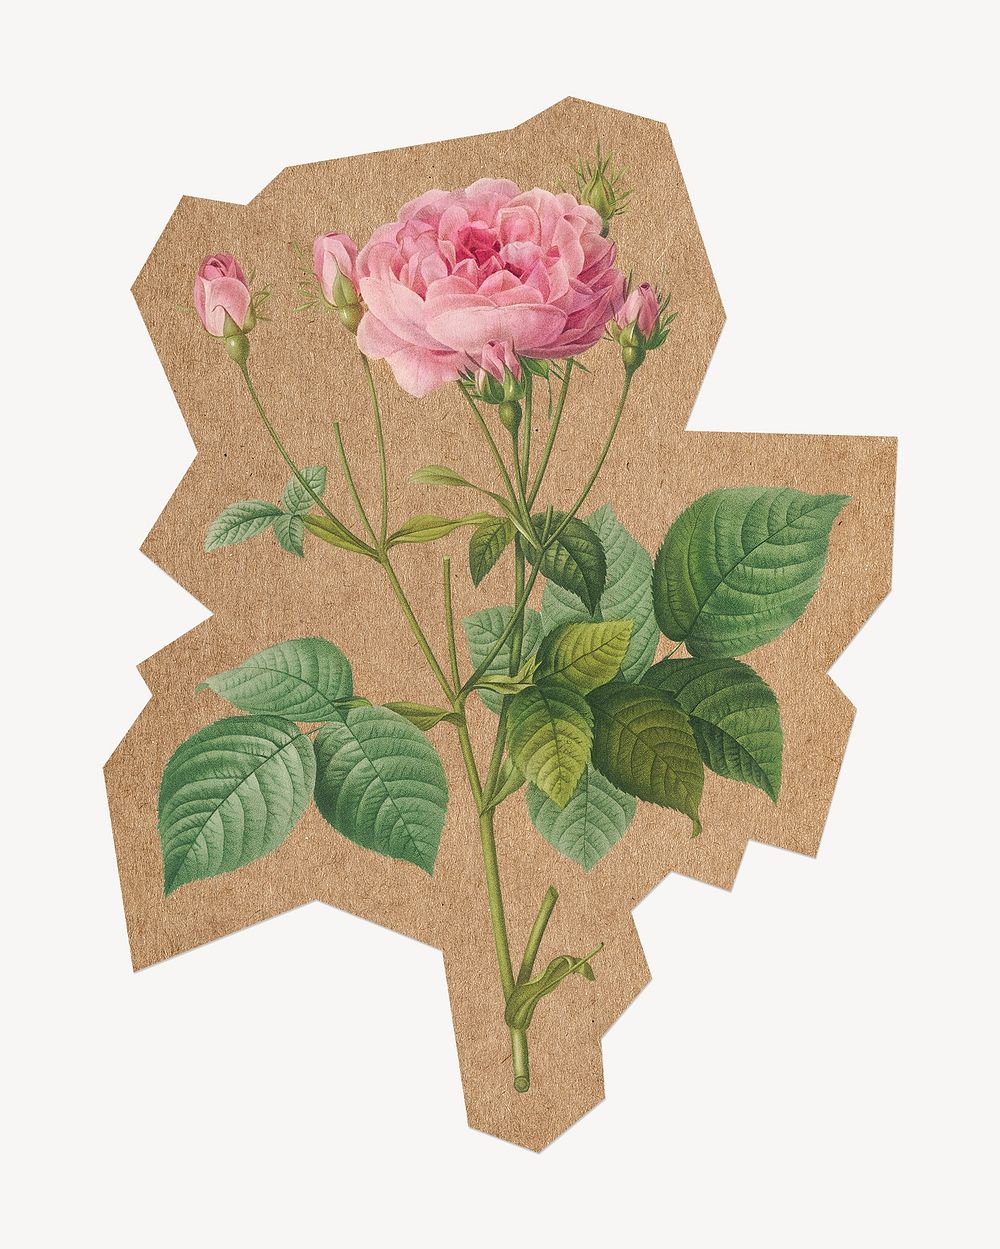 Vintage rosebush, cut out paper element. Artwork from Pierre Joseph Redouté remixed by rawpixel.